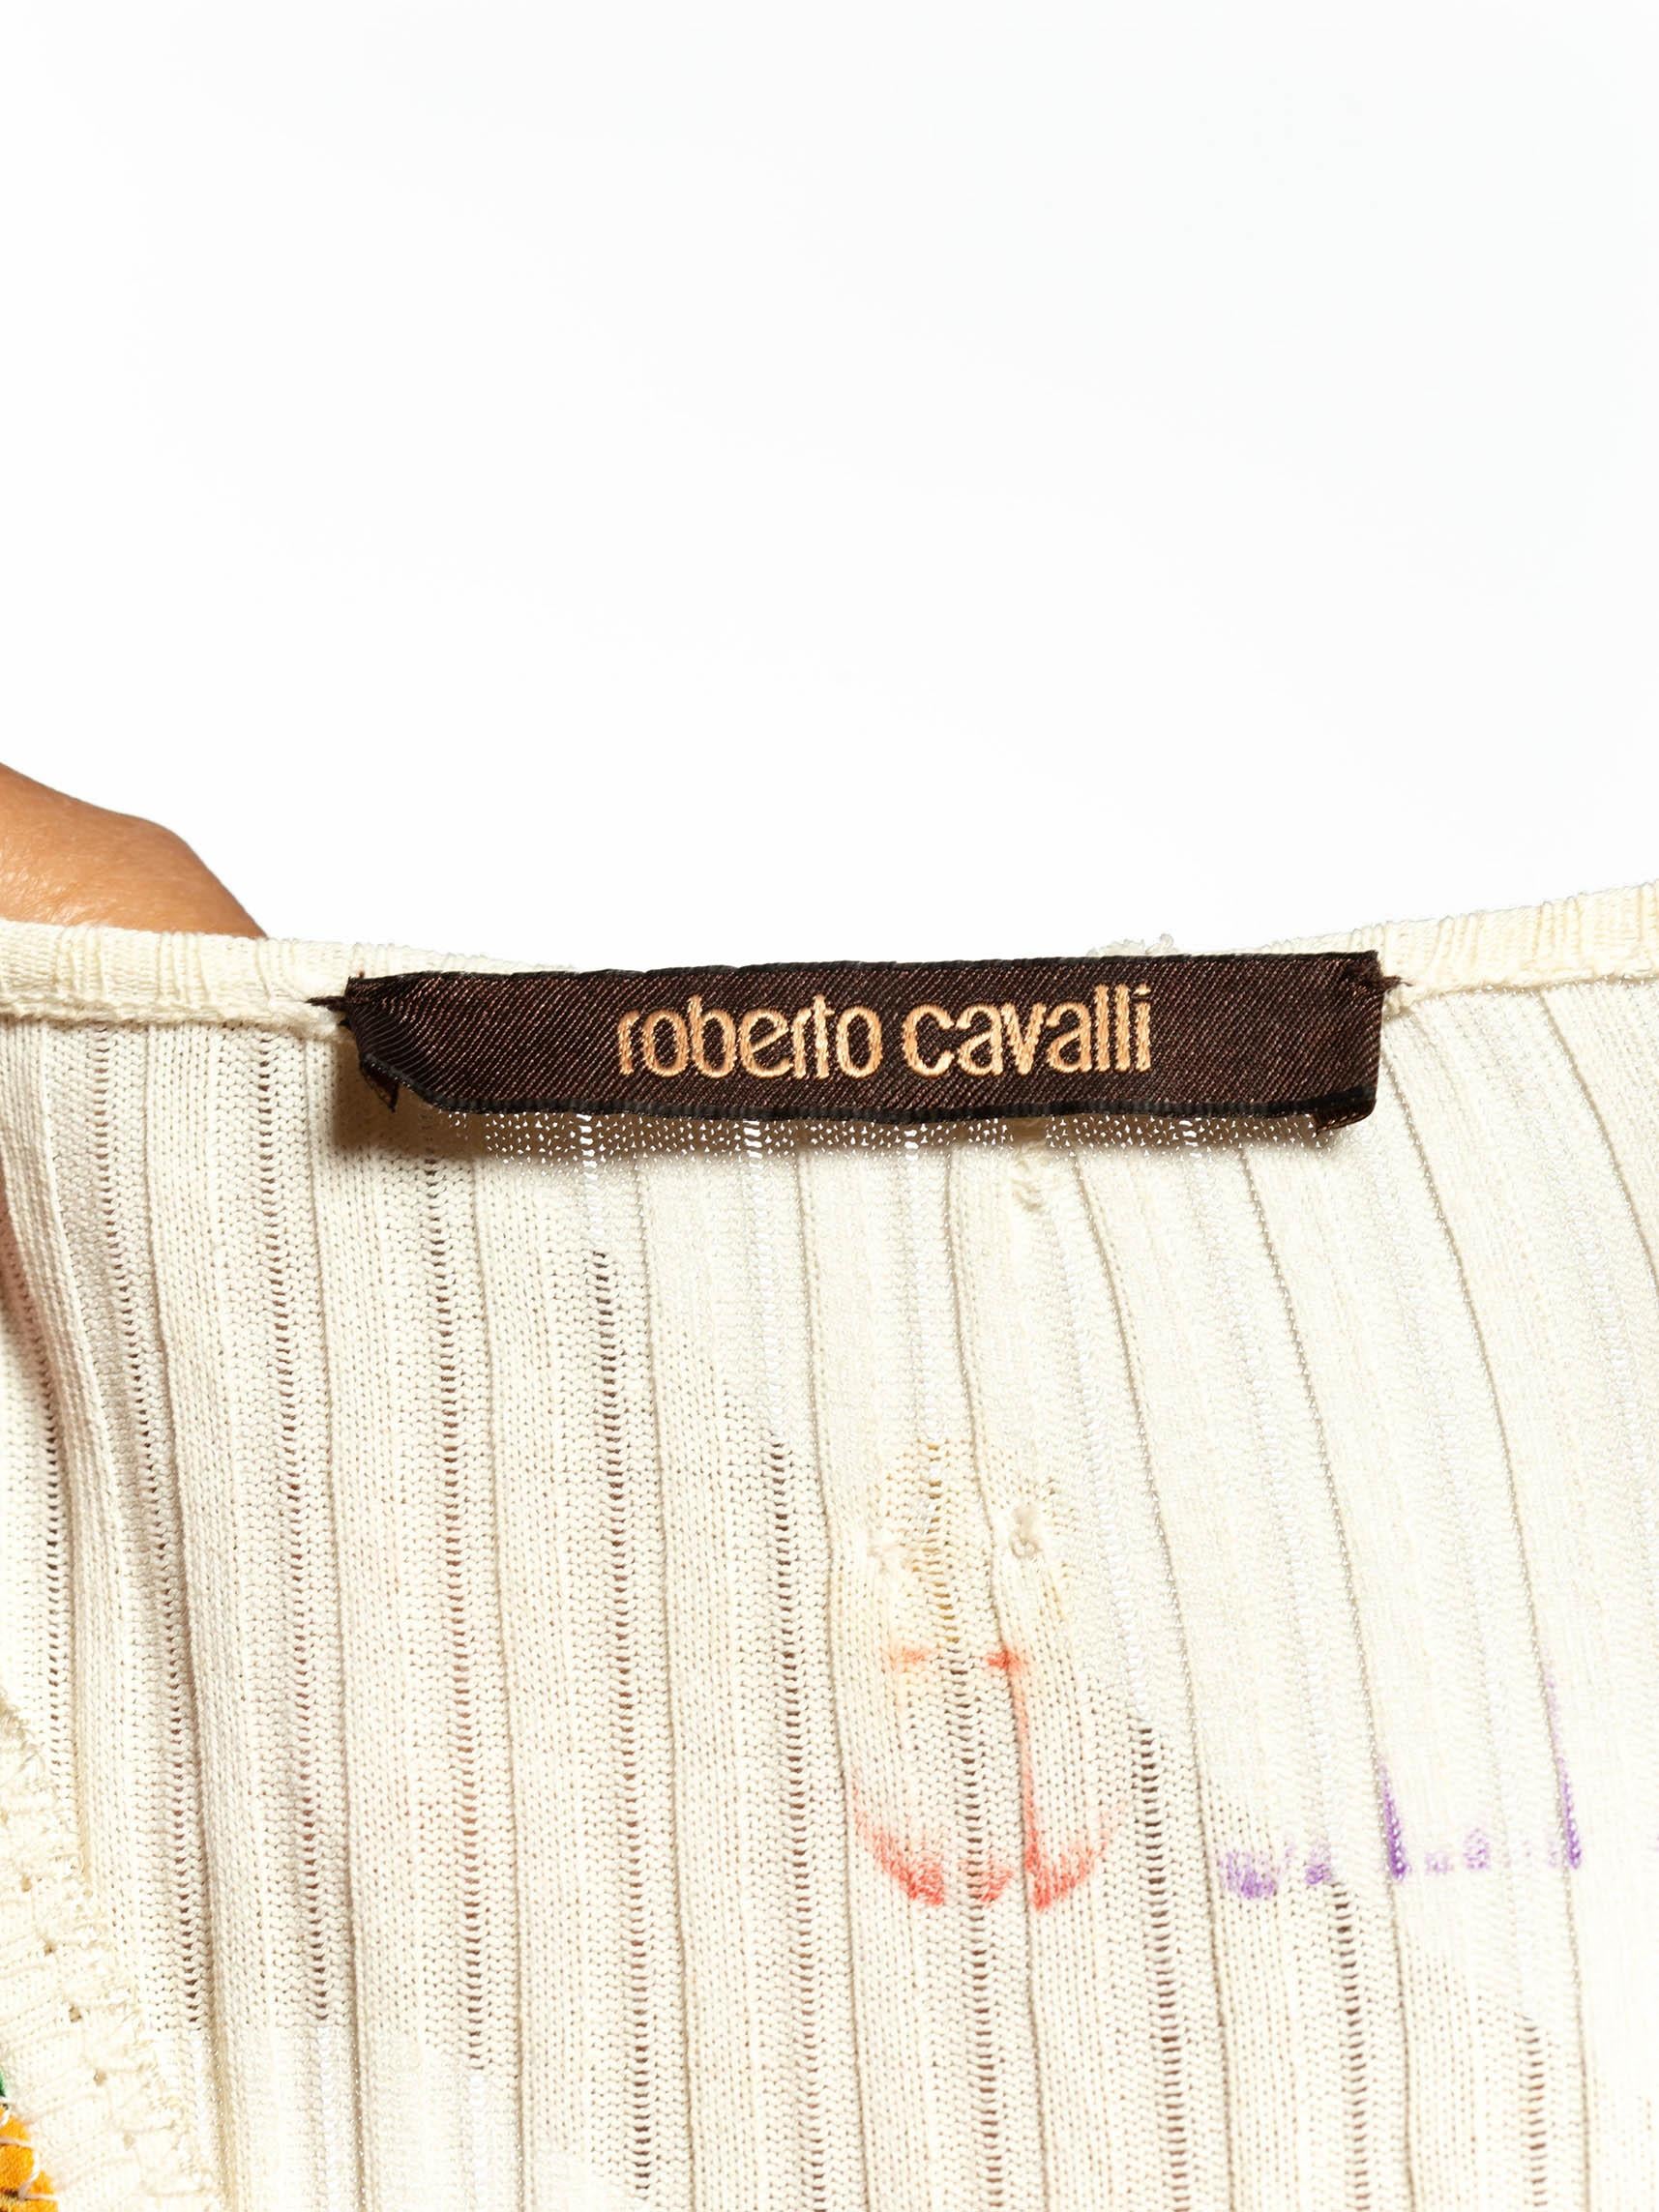 2000S ROBERTO CAVALLI Rayon & Silk Rainbow Paisley Print Knit Scarf Top For Sale 3